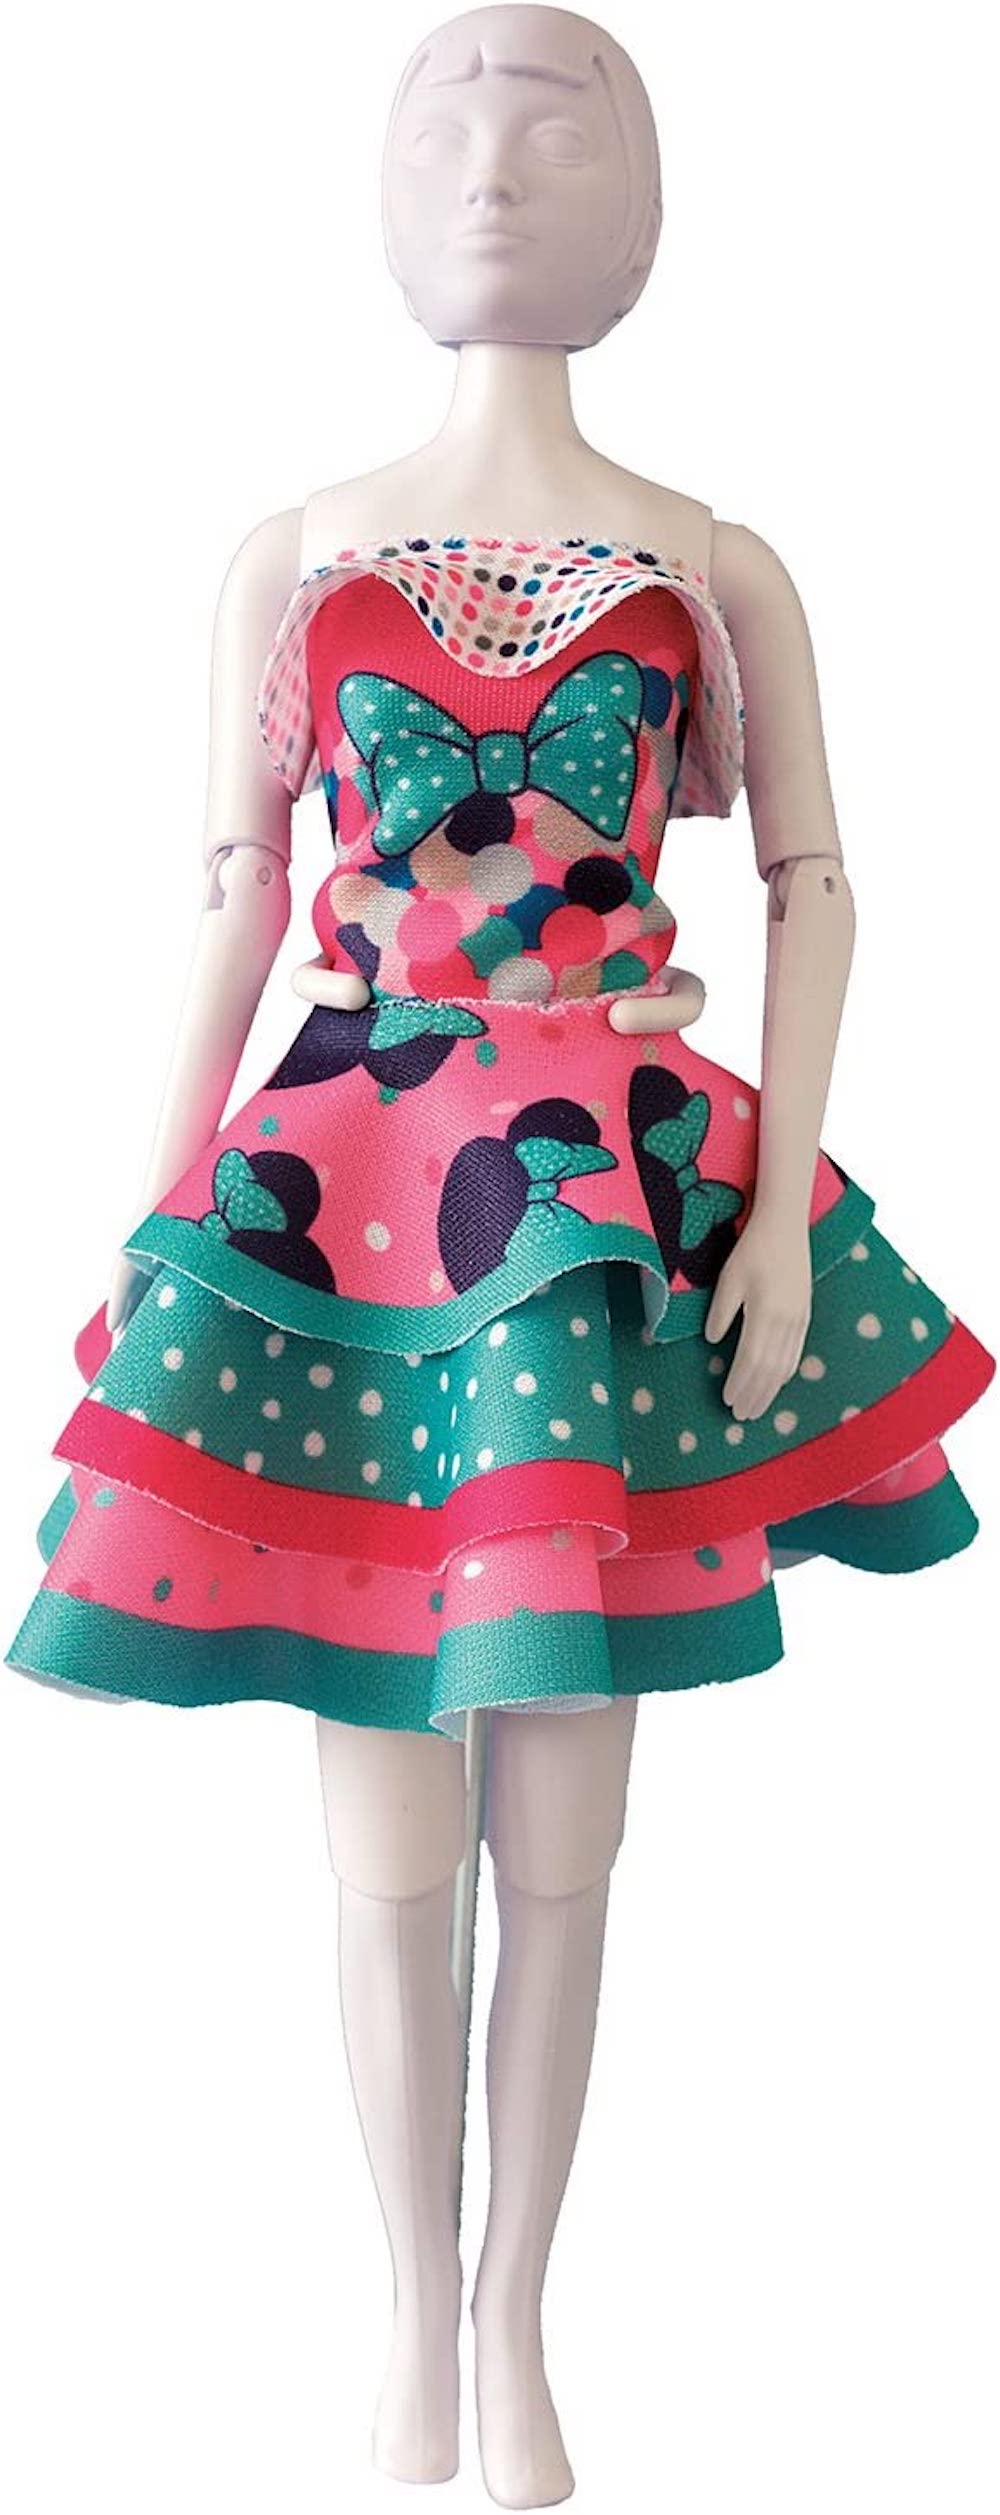 Dress your Doll  Nähe selbst ein Outfit für Deine Mode Puppe!  29cm  Disney Minnie Mouse  Maggy  Minnie Bow